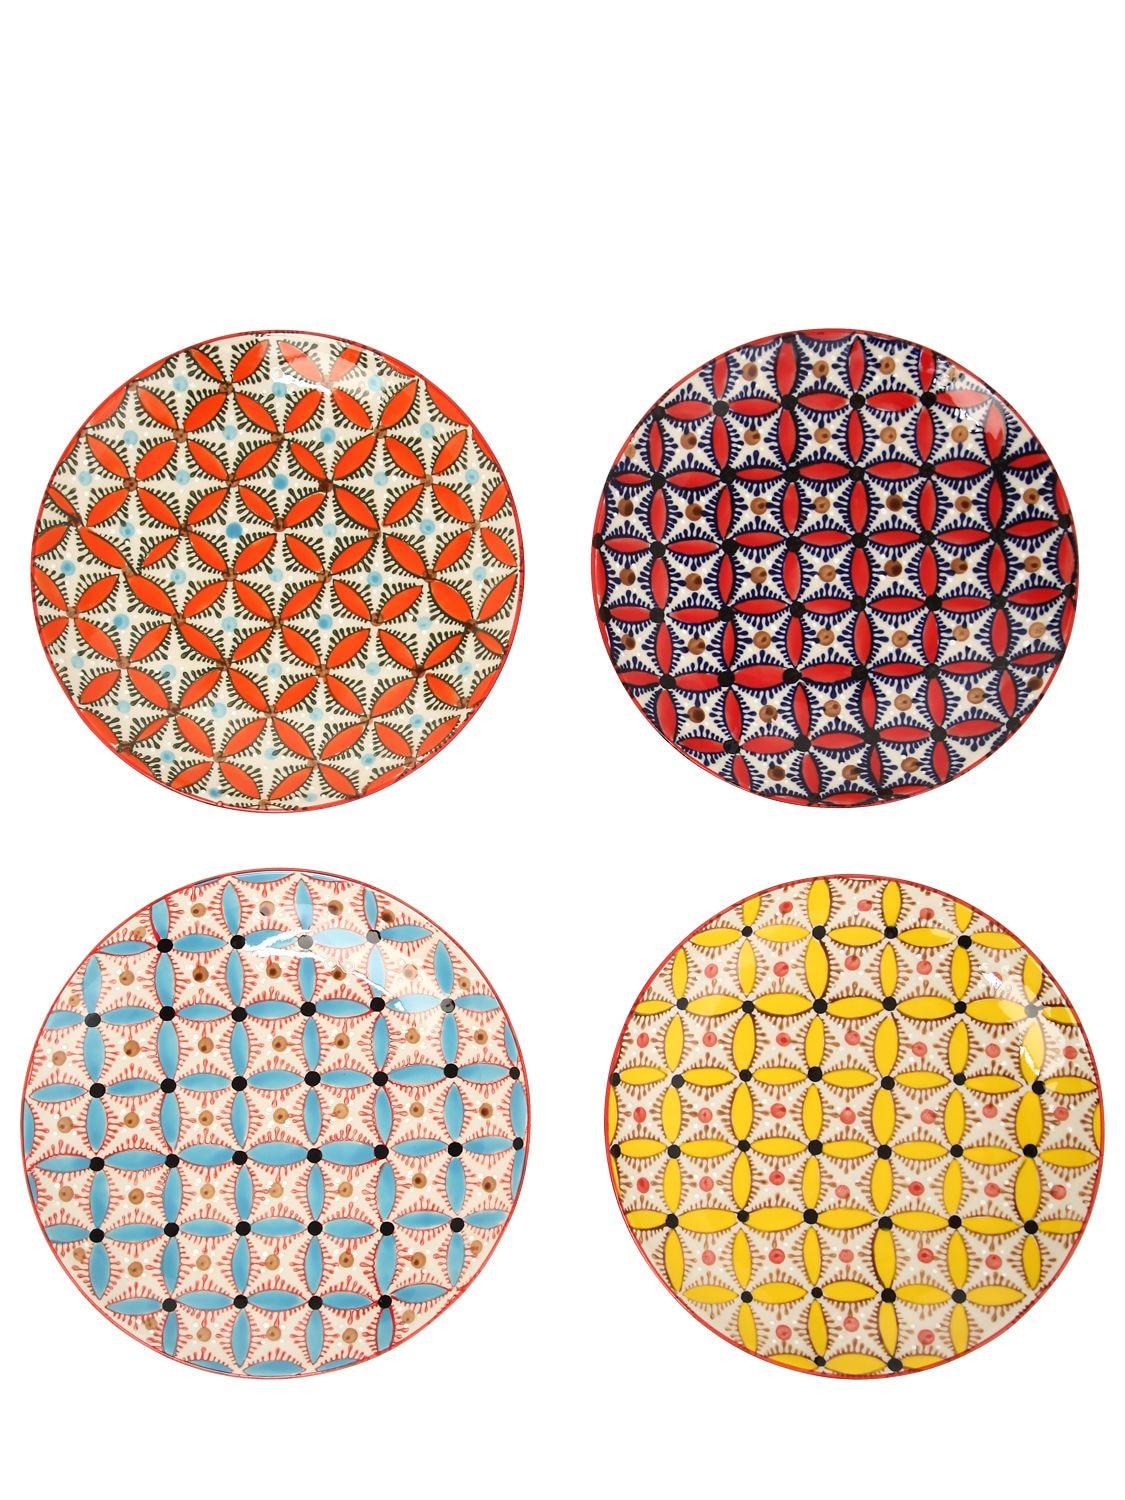 Pols Potten Set Of 4 Hippy Ceramic Plates In Multicolor